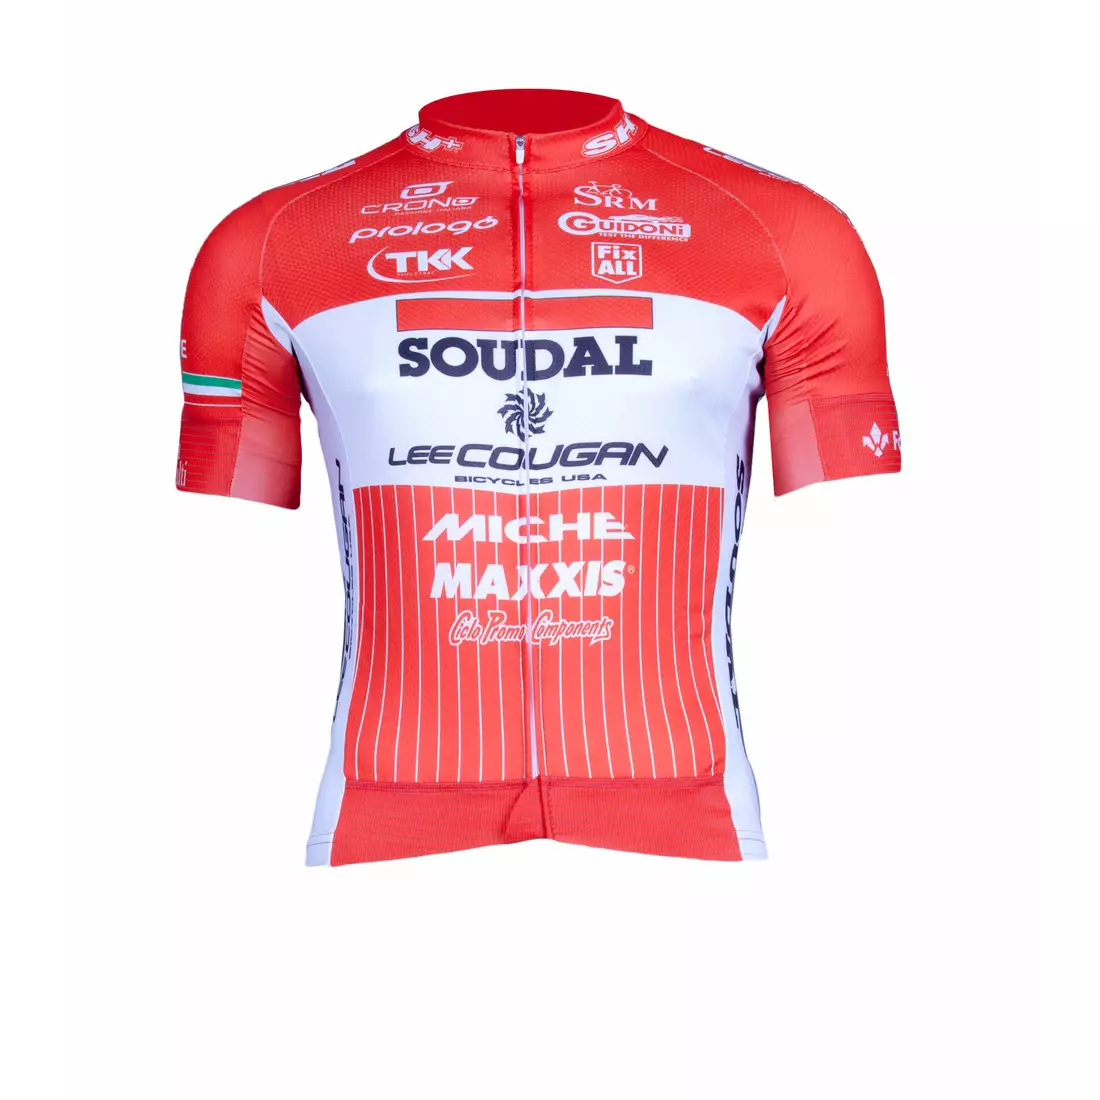 BIEMME SOUDAL-LEE COUGAN Racing Team 2017 - pánský cyklistický dres